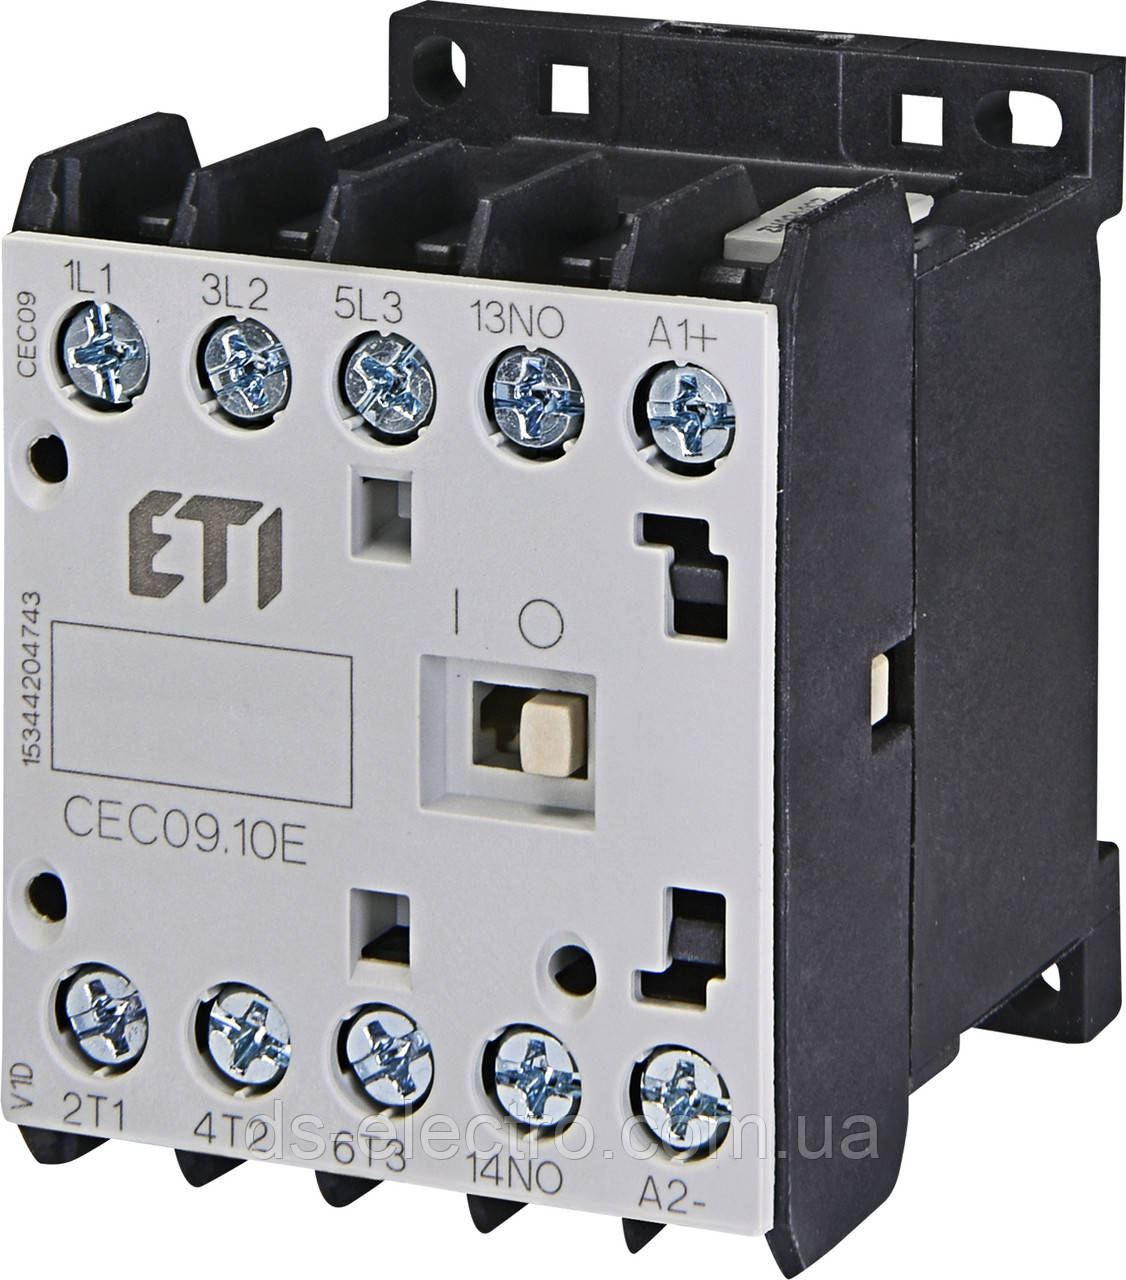 Контактор малогабаритний ETI, CEC, 24V DC, 4 кВт